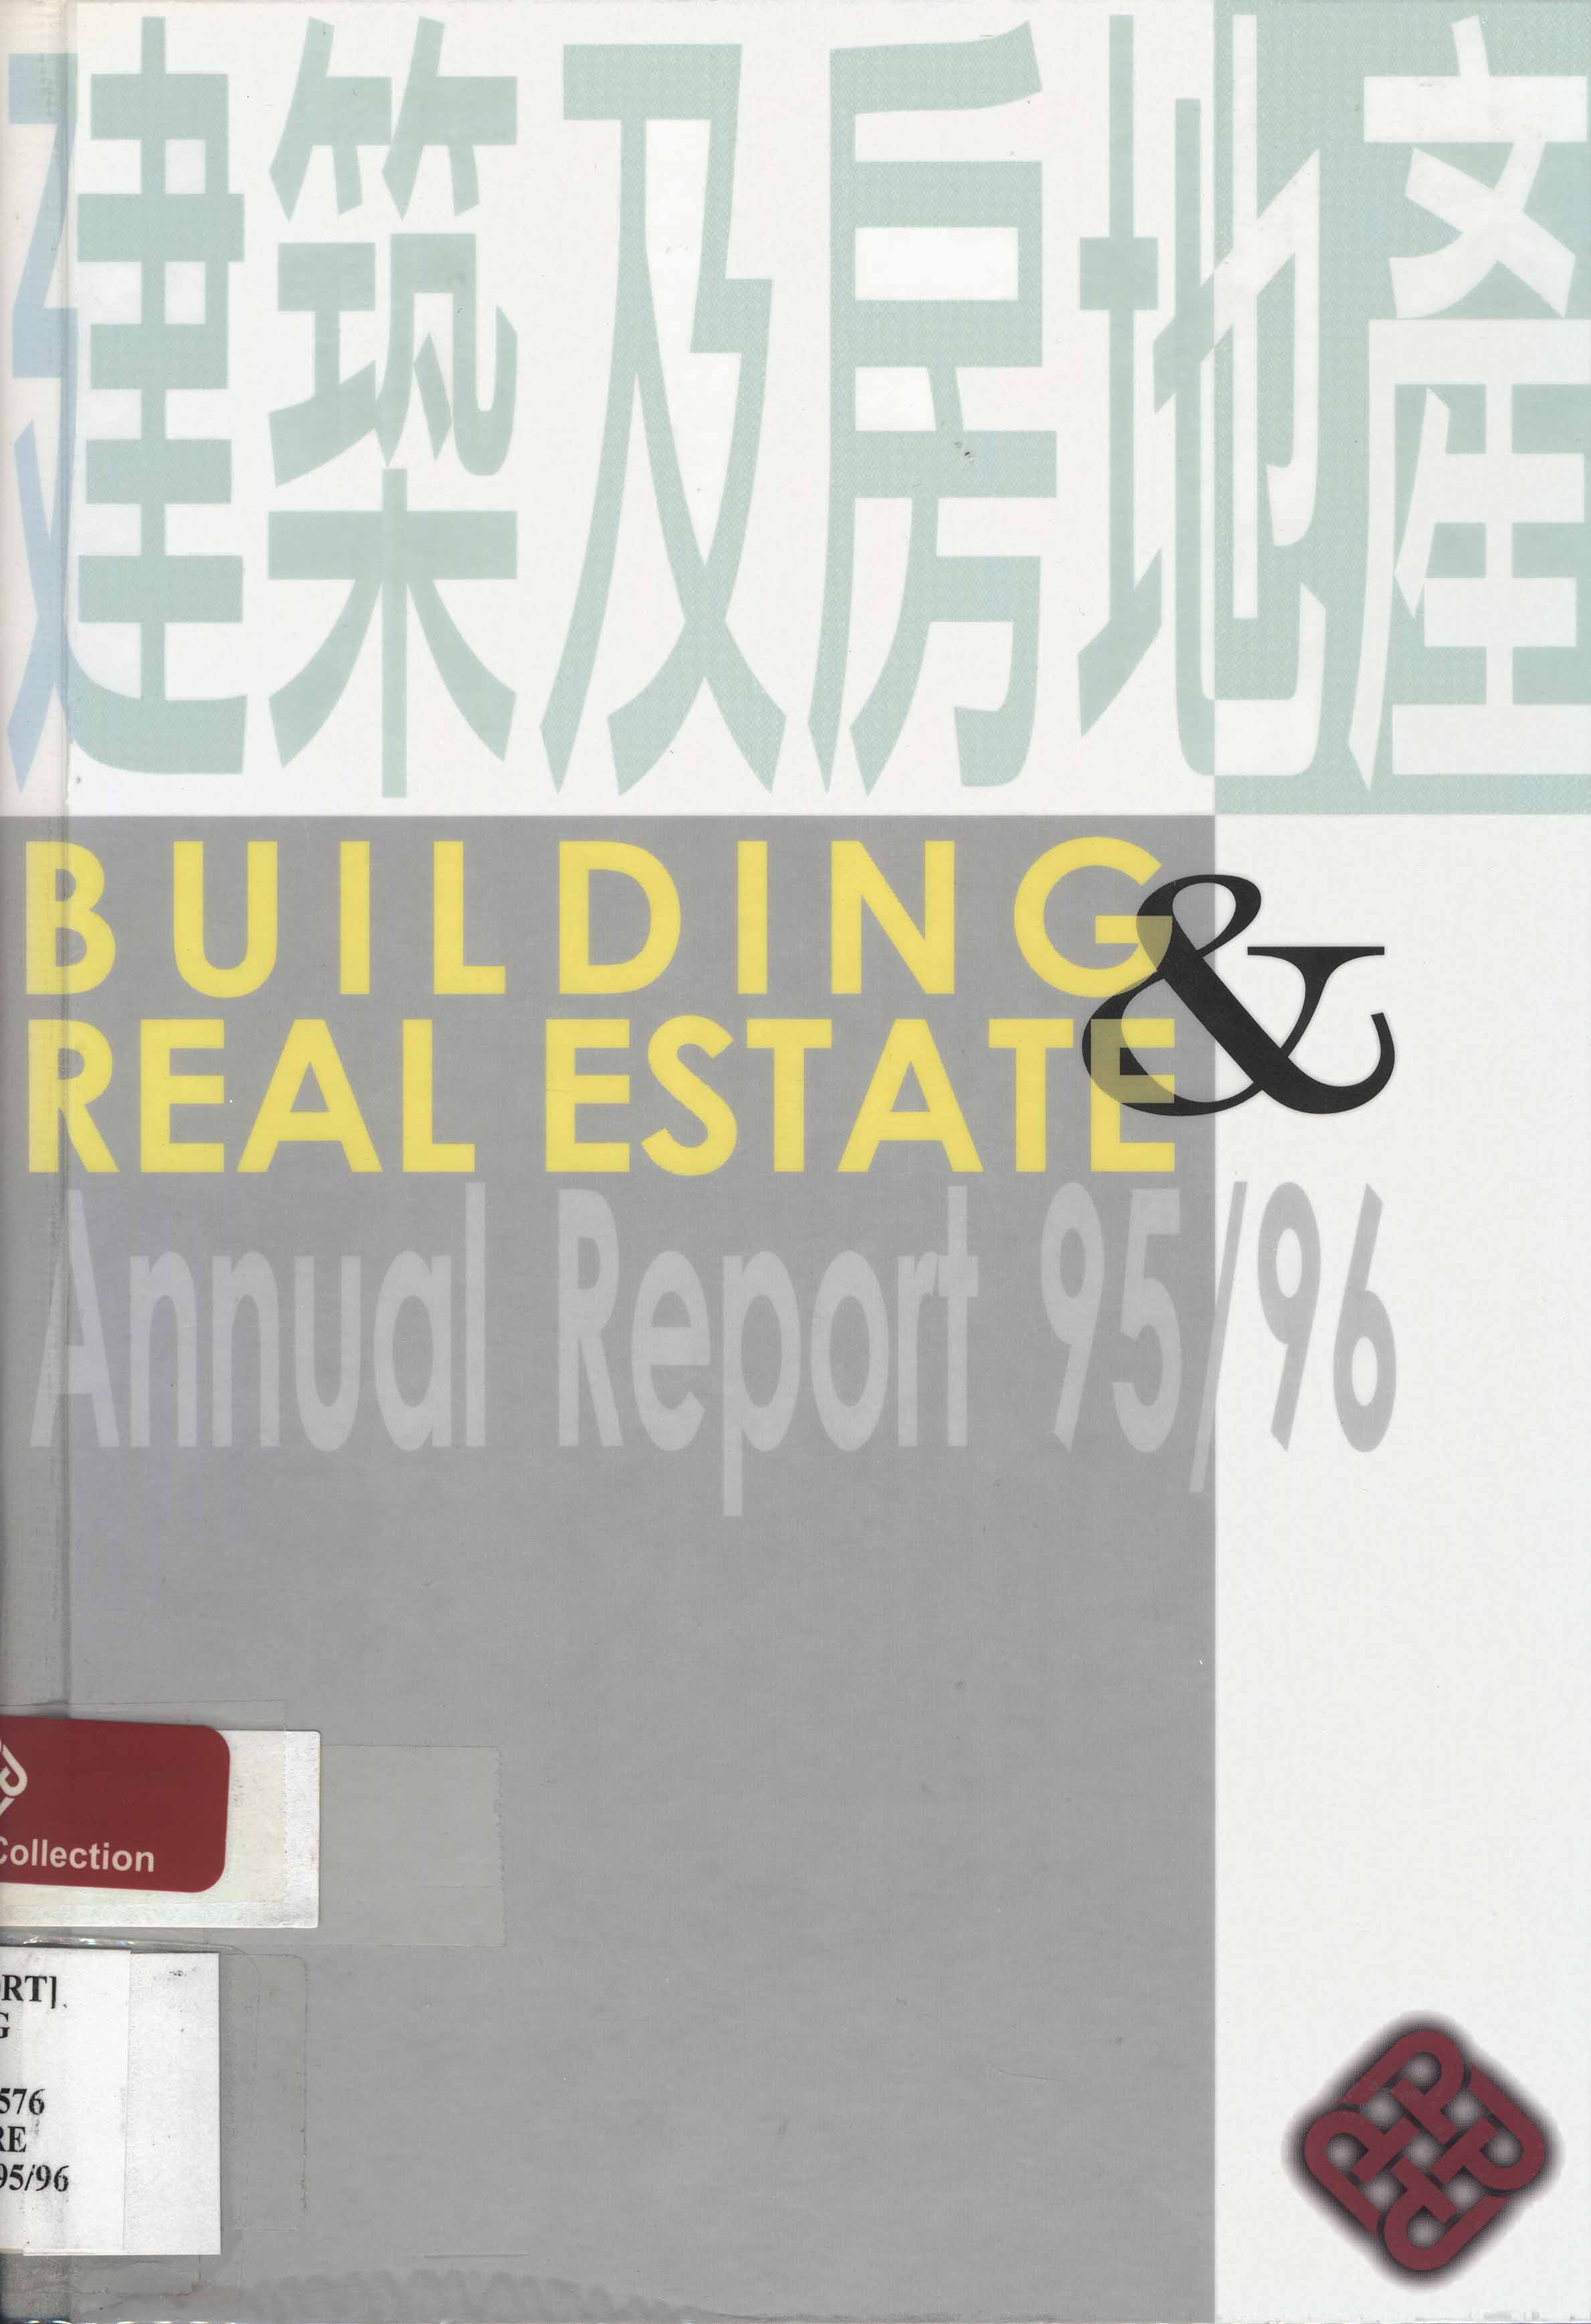 Building & real estate annual report 95/96